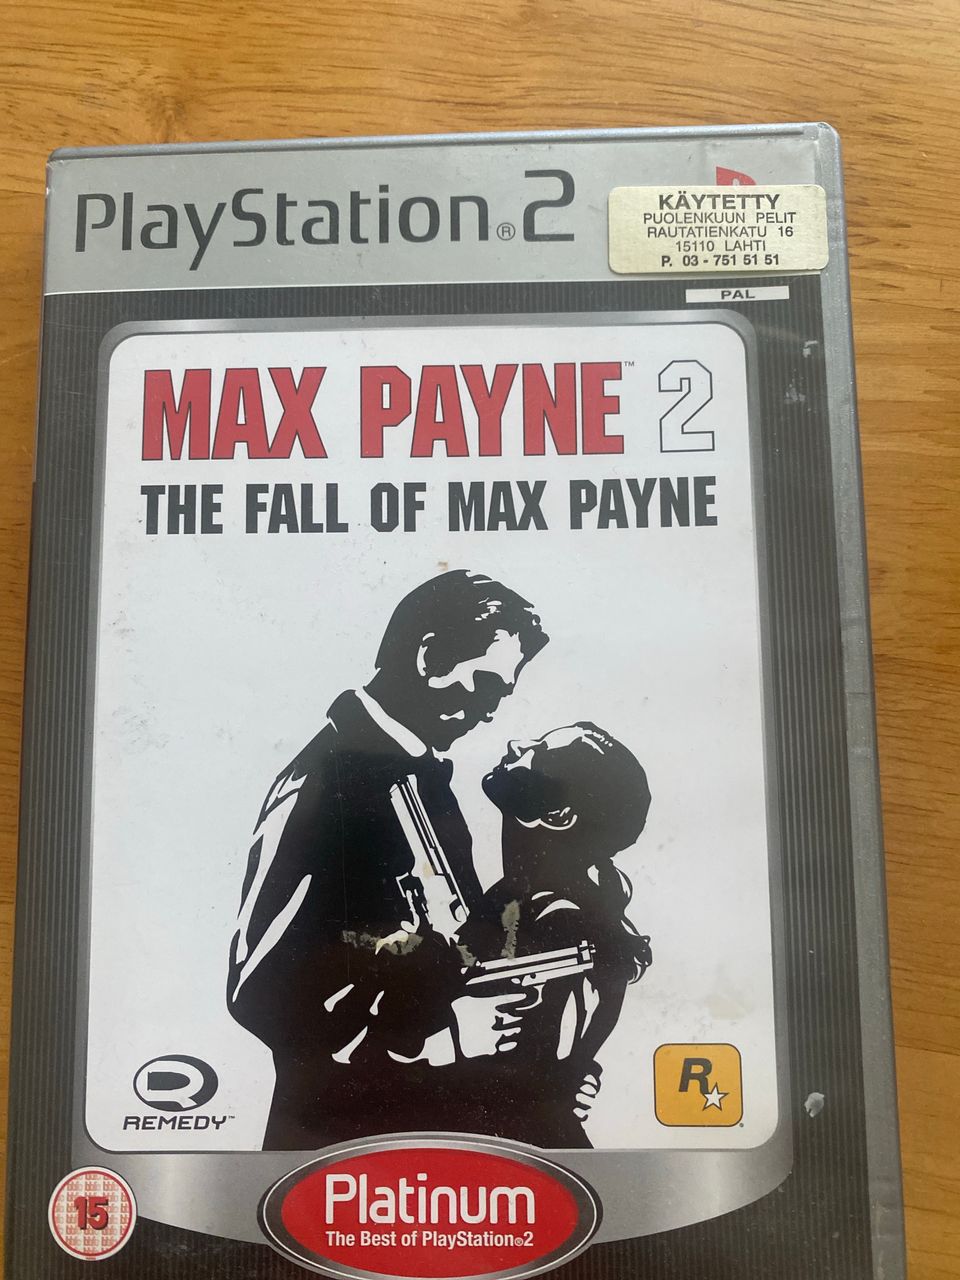 Ps2 Max payne - The fall of max payne